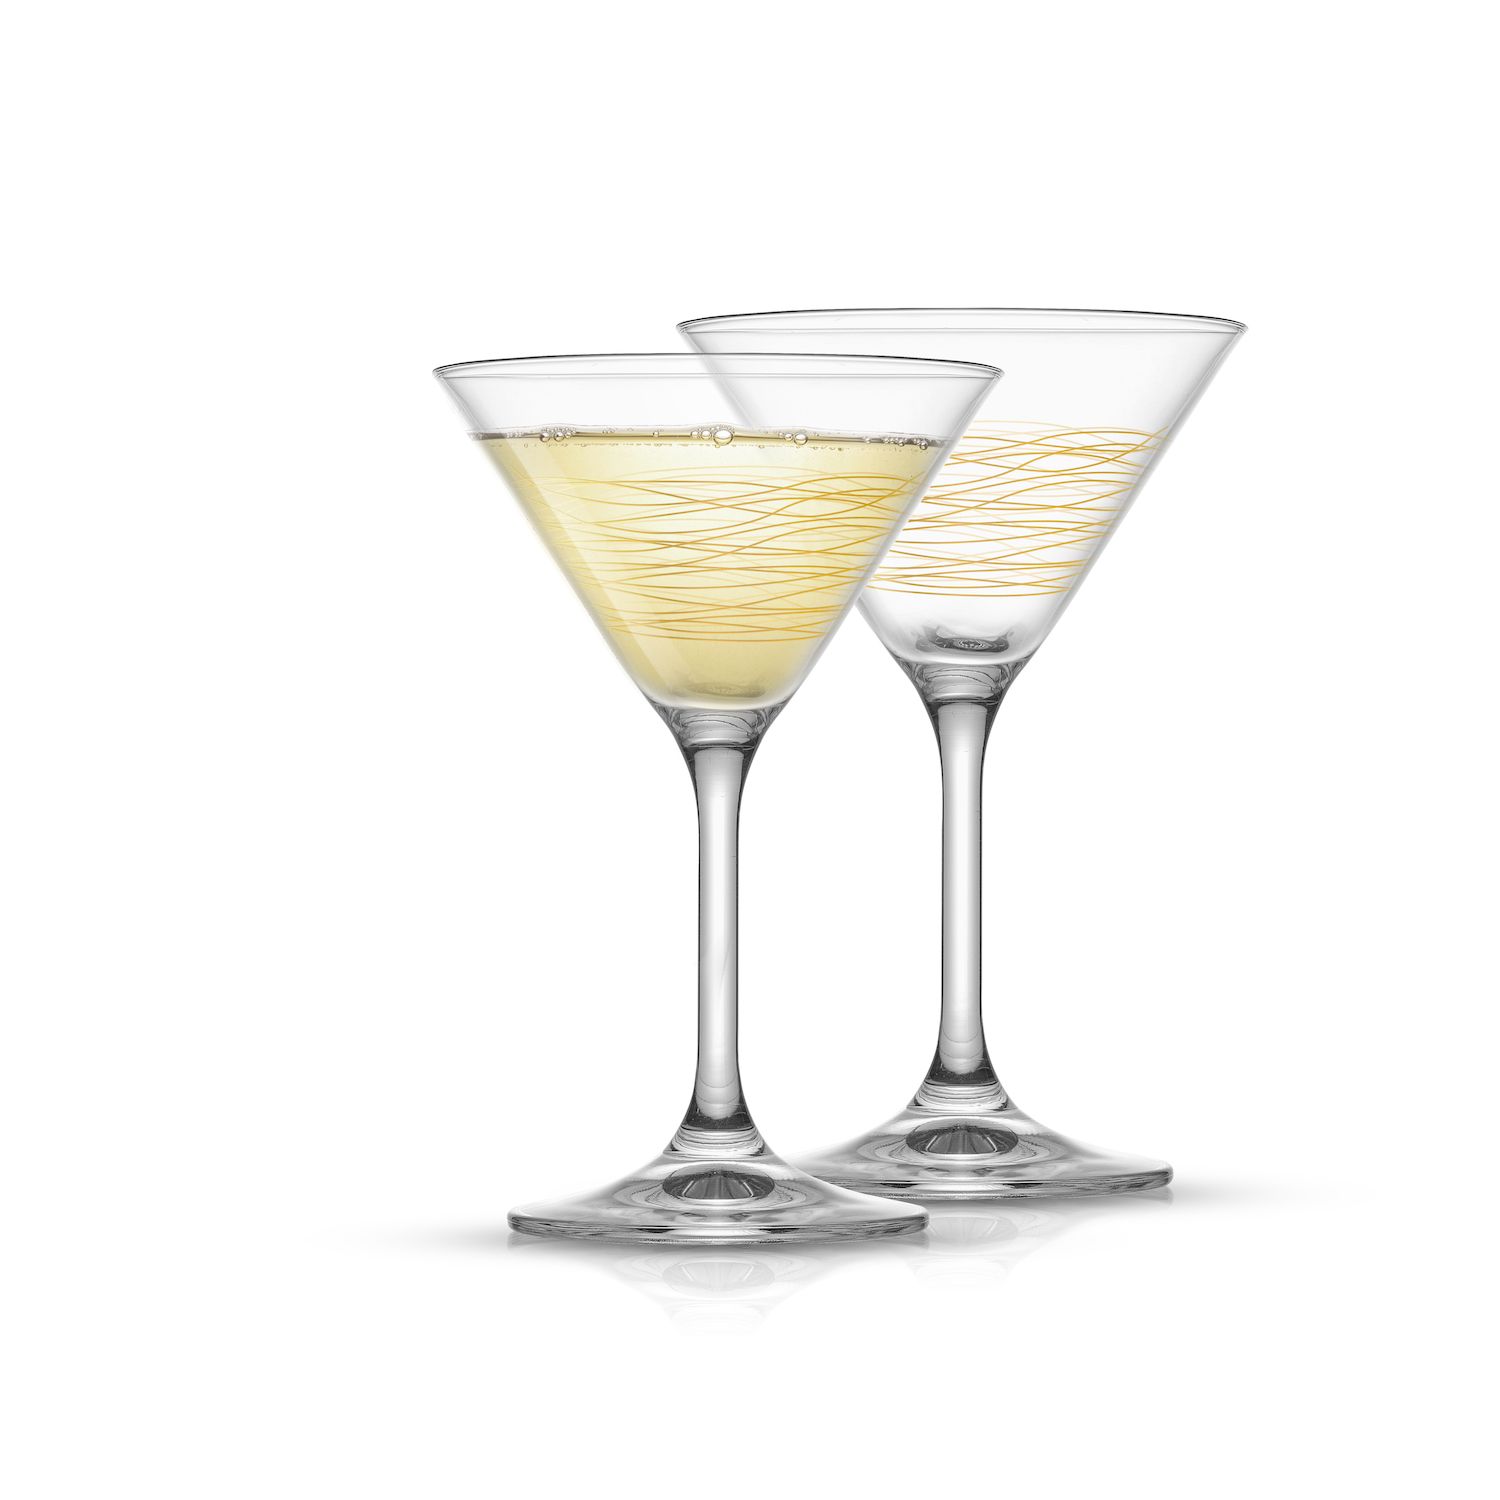 JoyJolt Black Swan Martini Glasses, 10.5 Oz Set of 2 